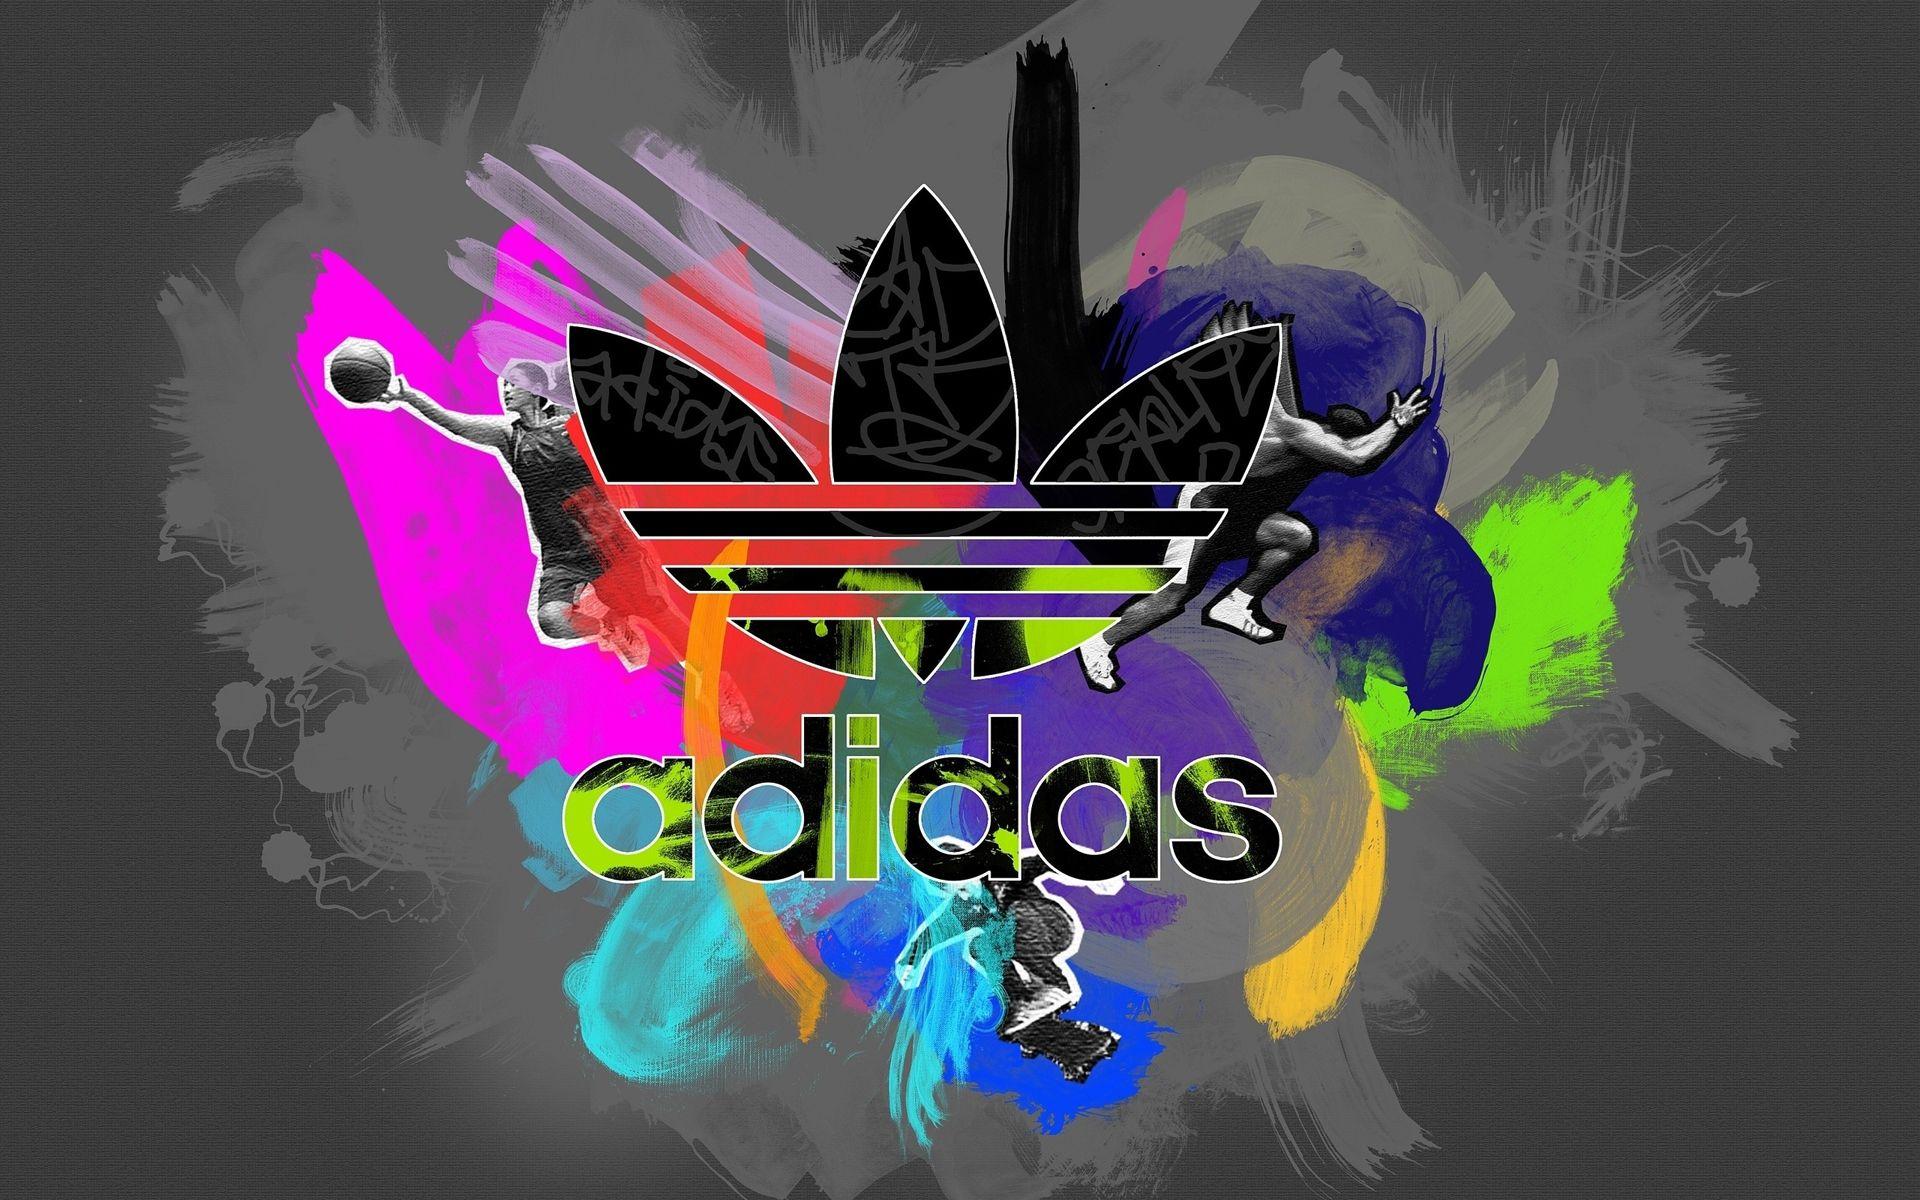 adidas logo wallpapers neon